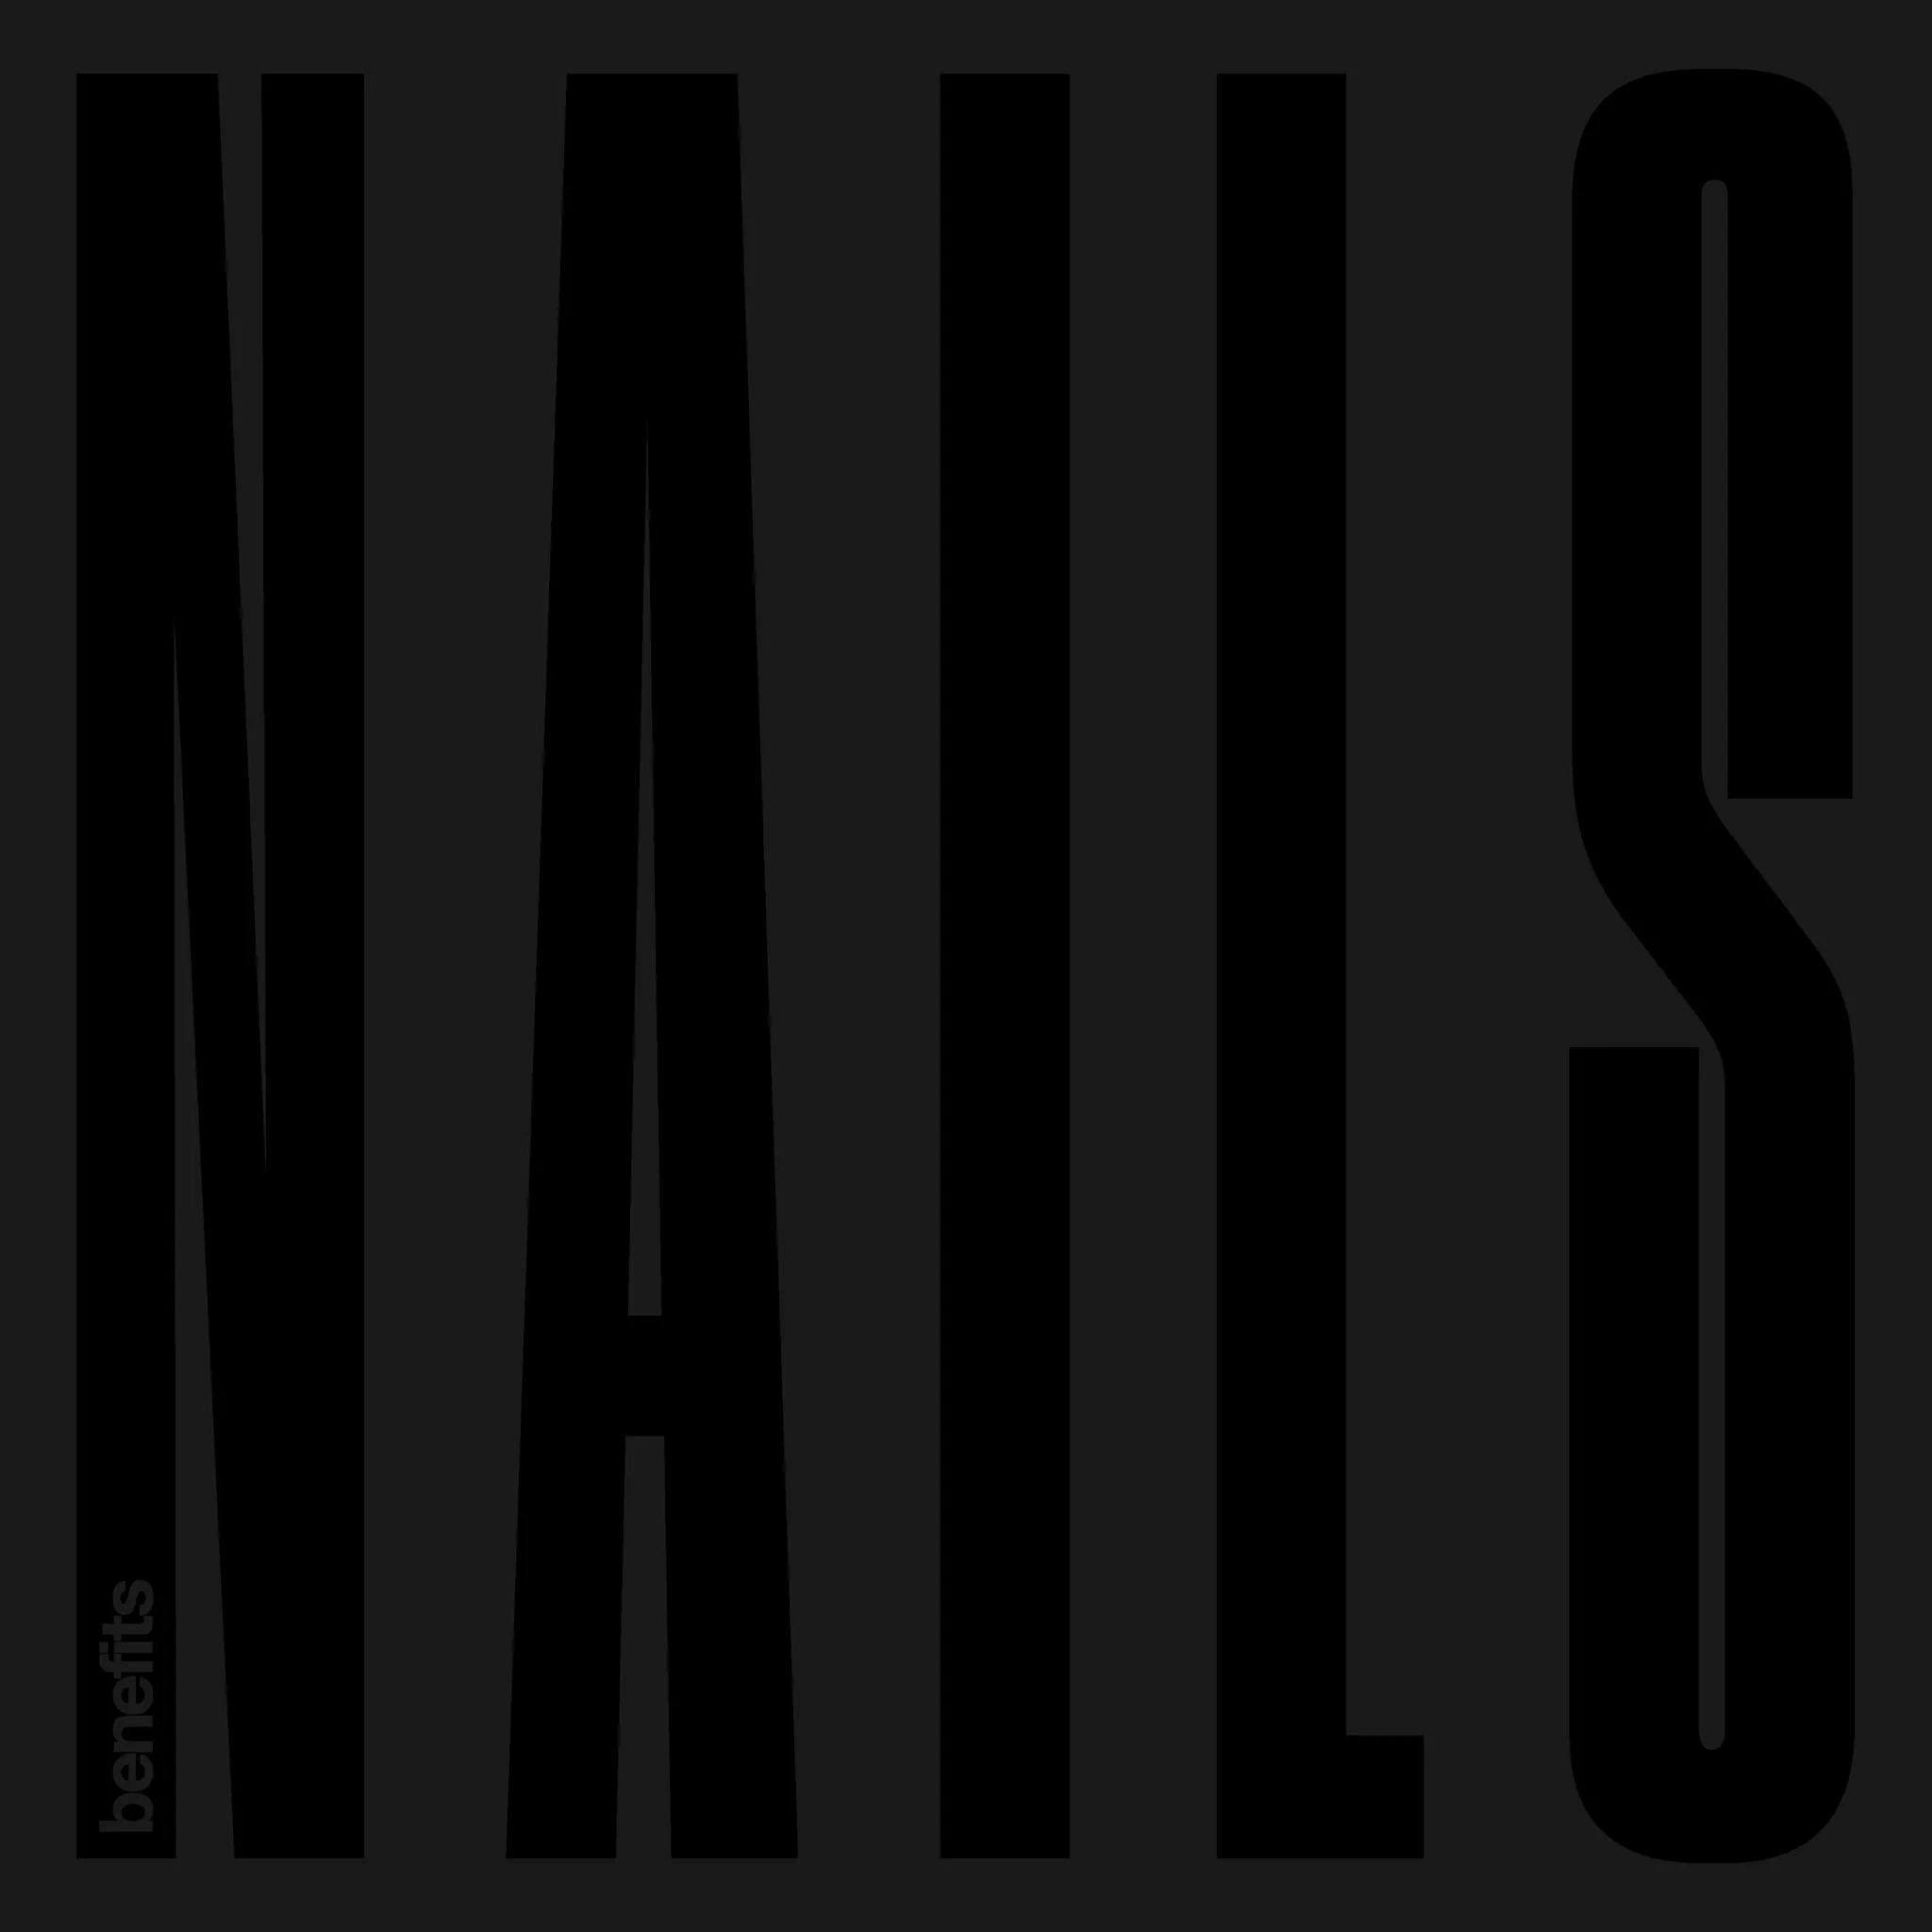 Benefits - Nails artwork